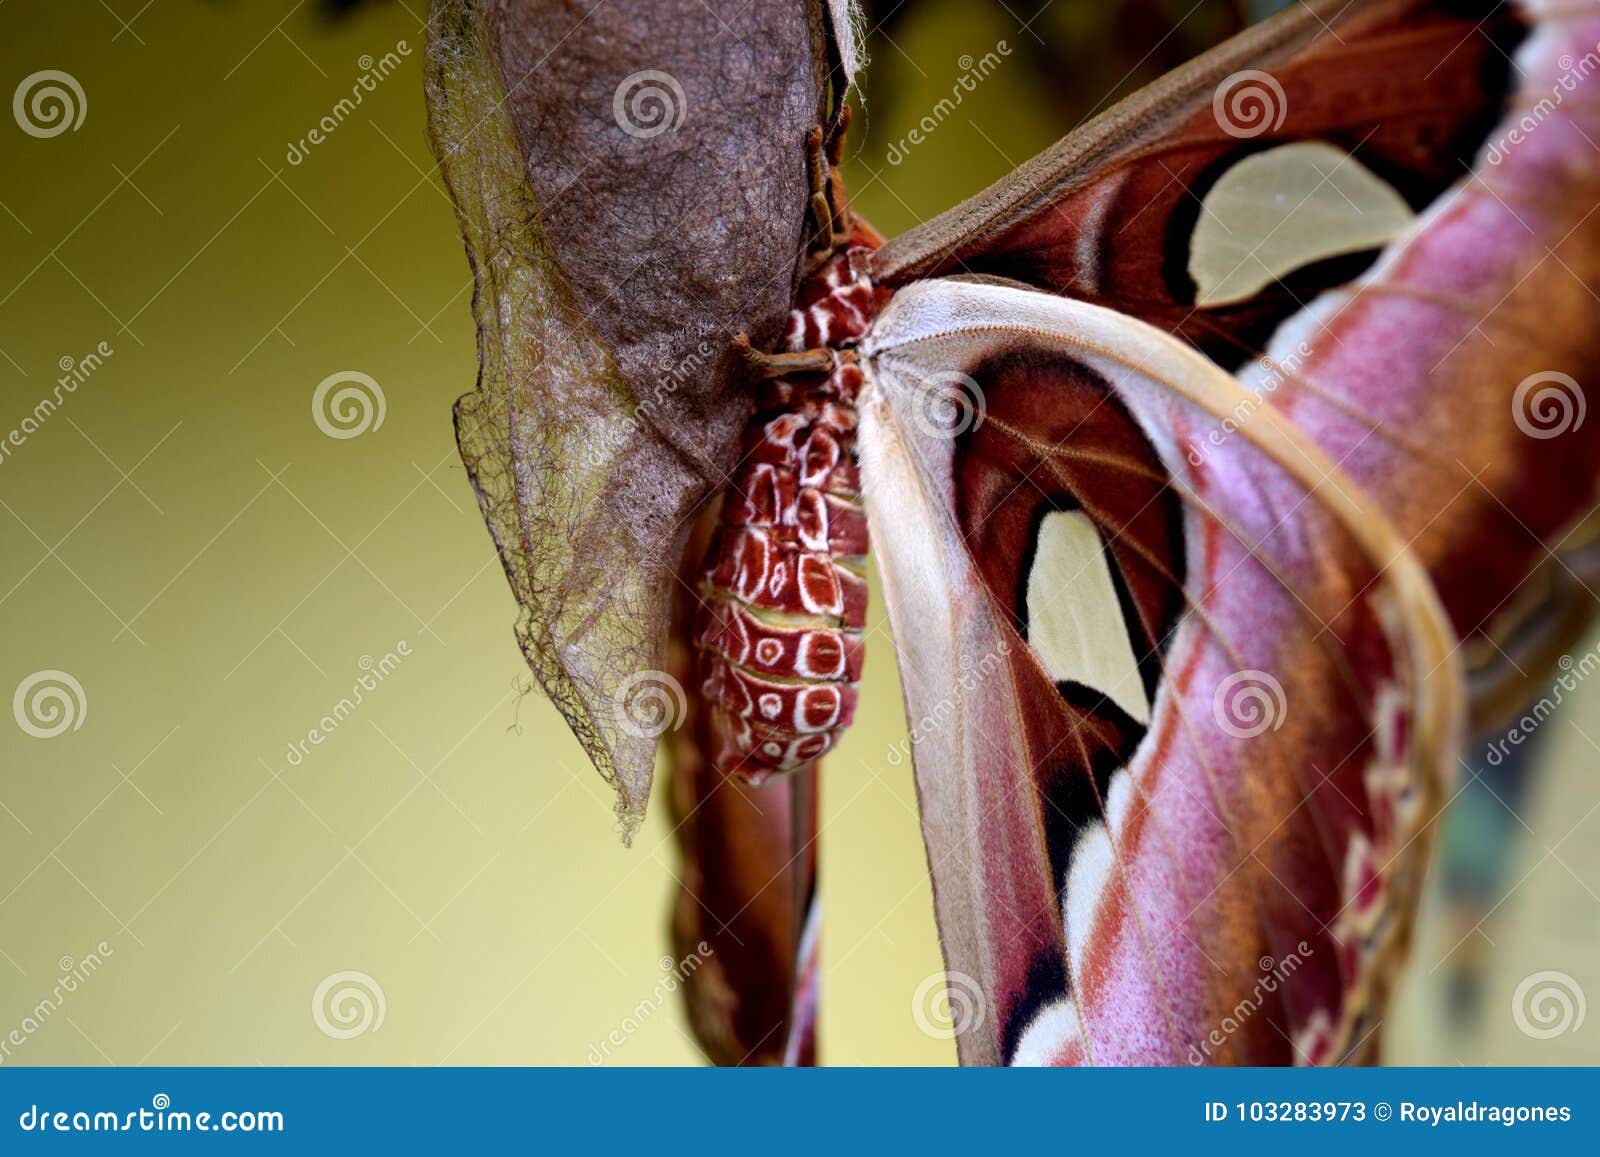 atlas moth on cocoon